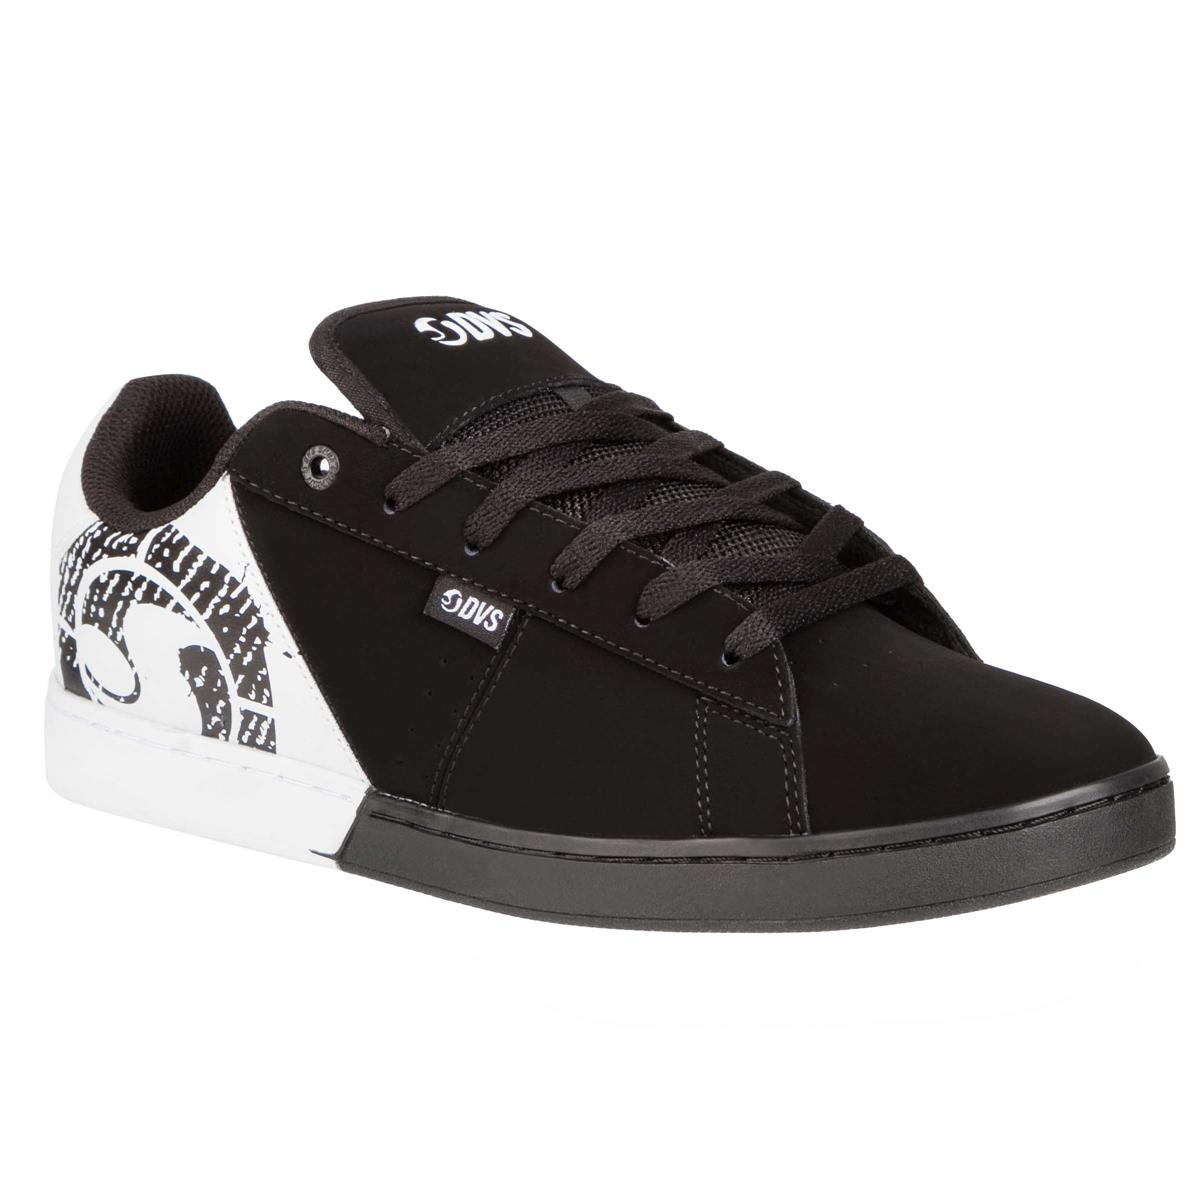 DVS Schuhe Revival Split Black/White/Leather